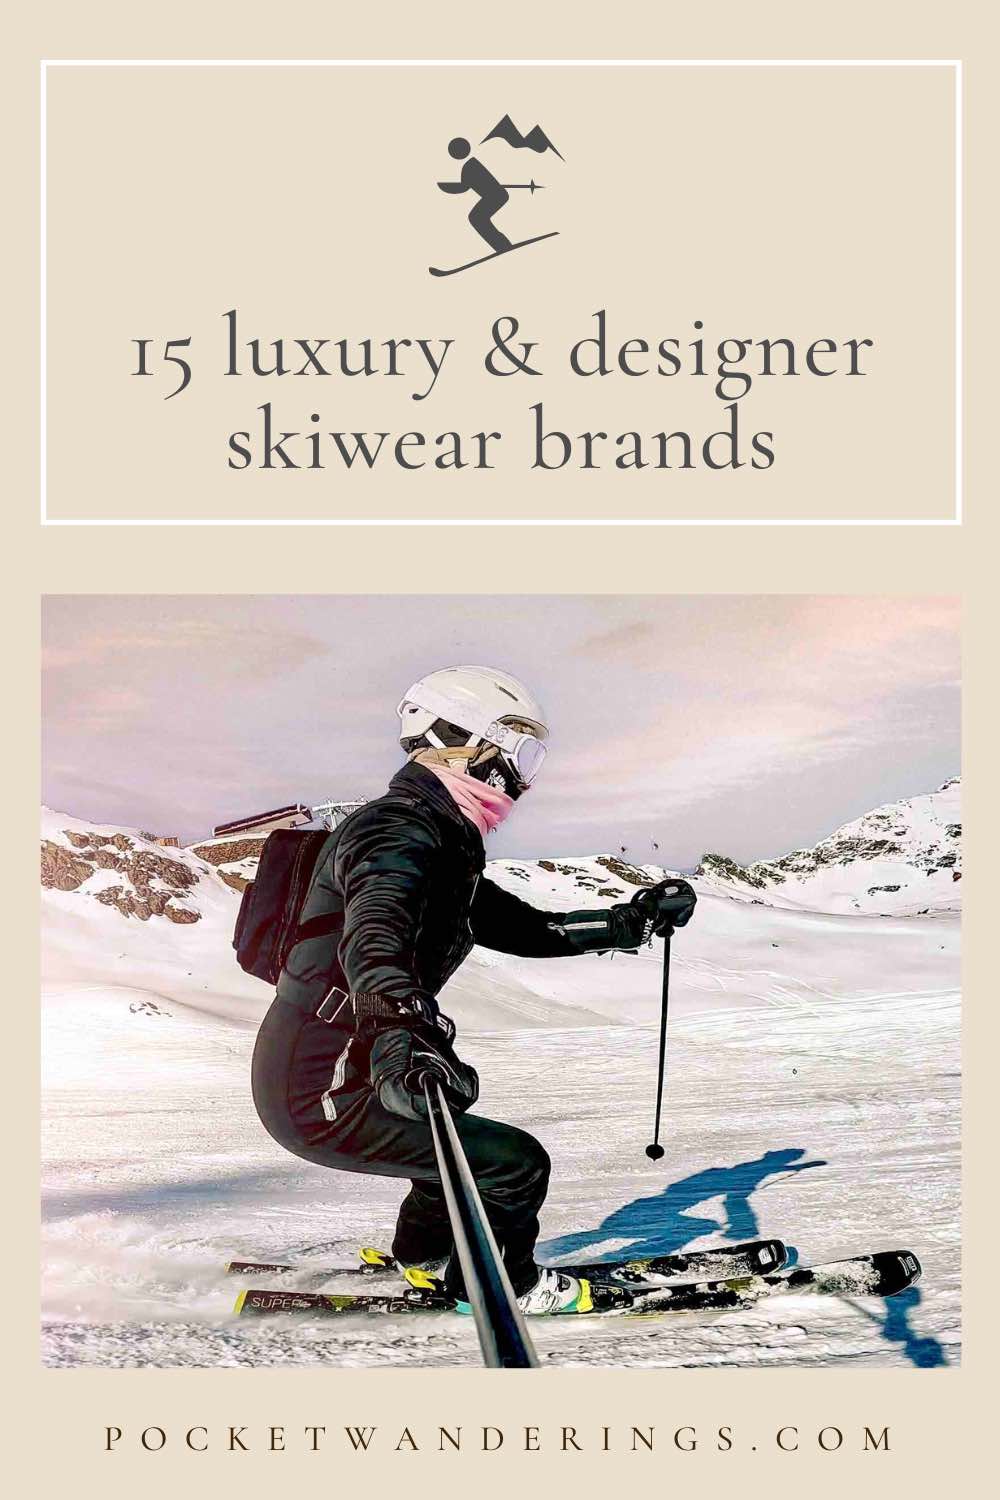 Best luxury ski gear - Times Travel